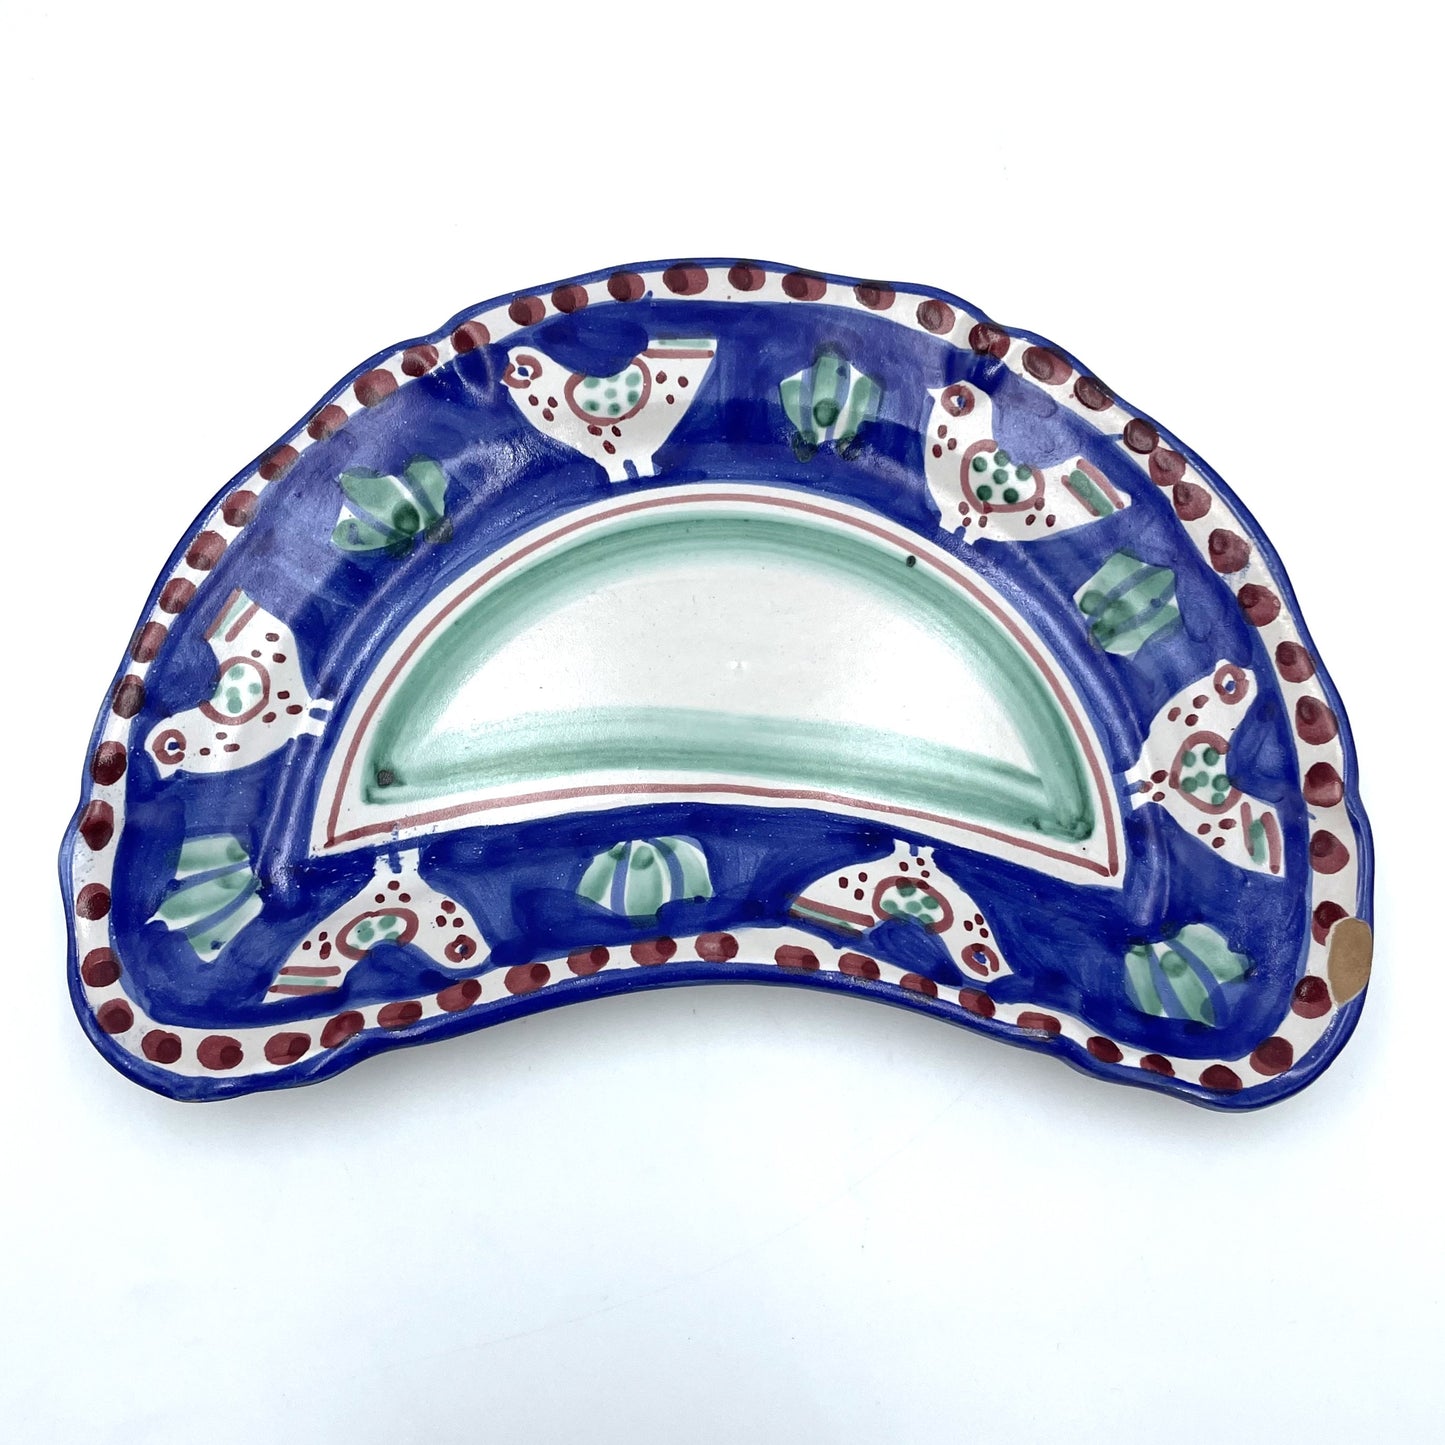 Vietri Italian Handpainted Moon Dish - 23cm